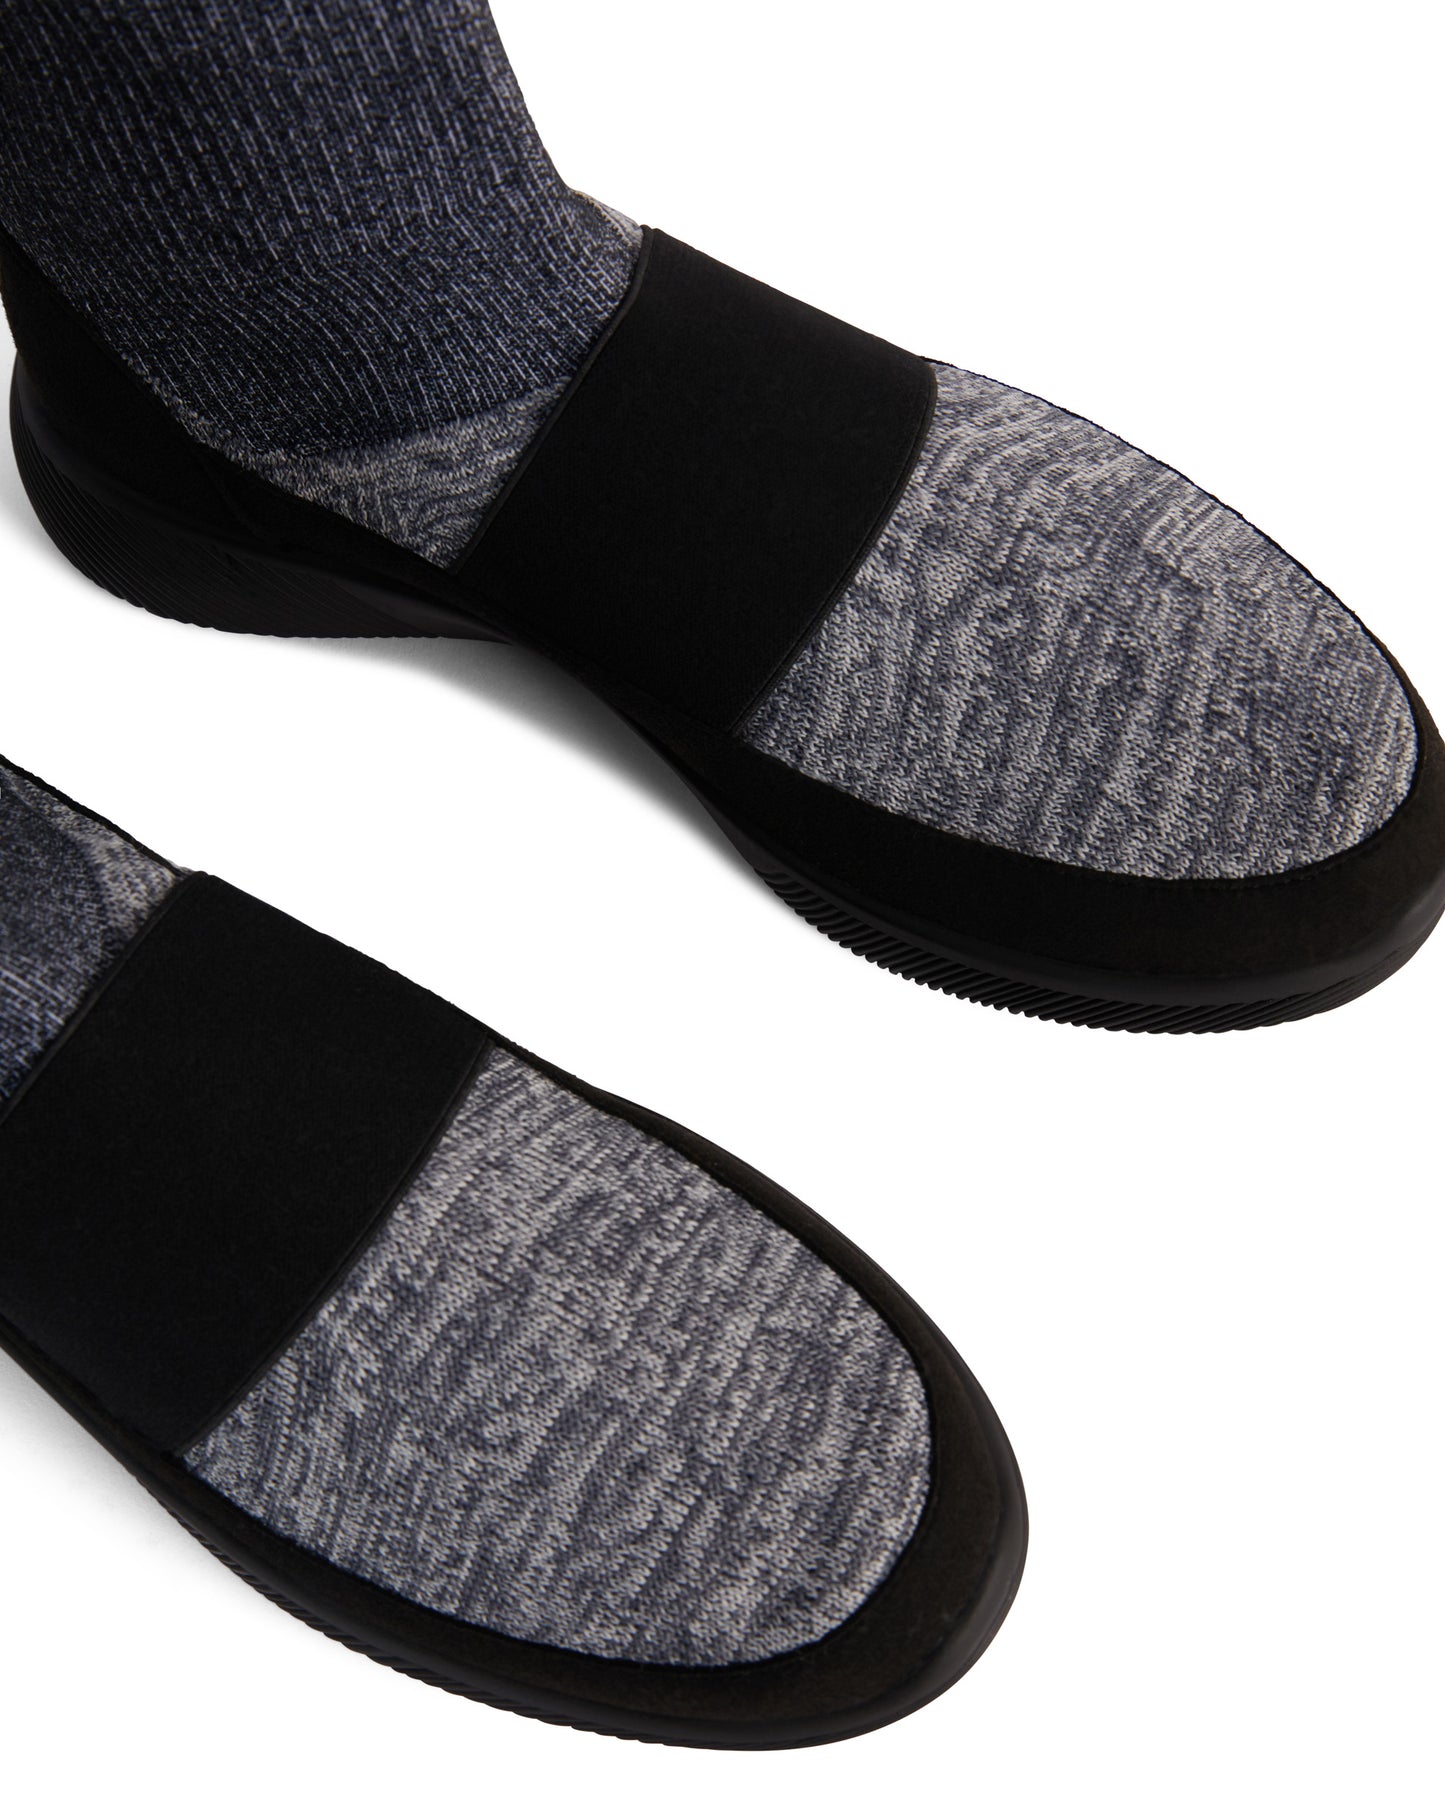 variant:: grey -- sollar shoe grey